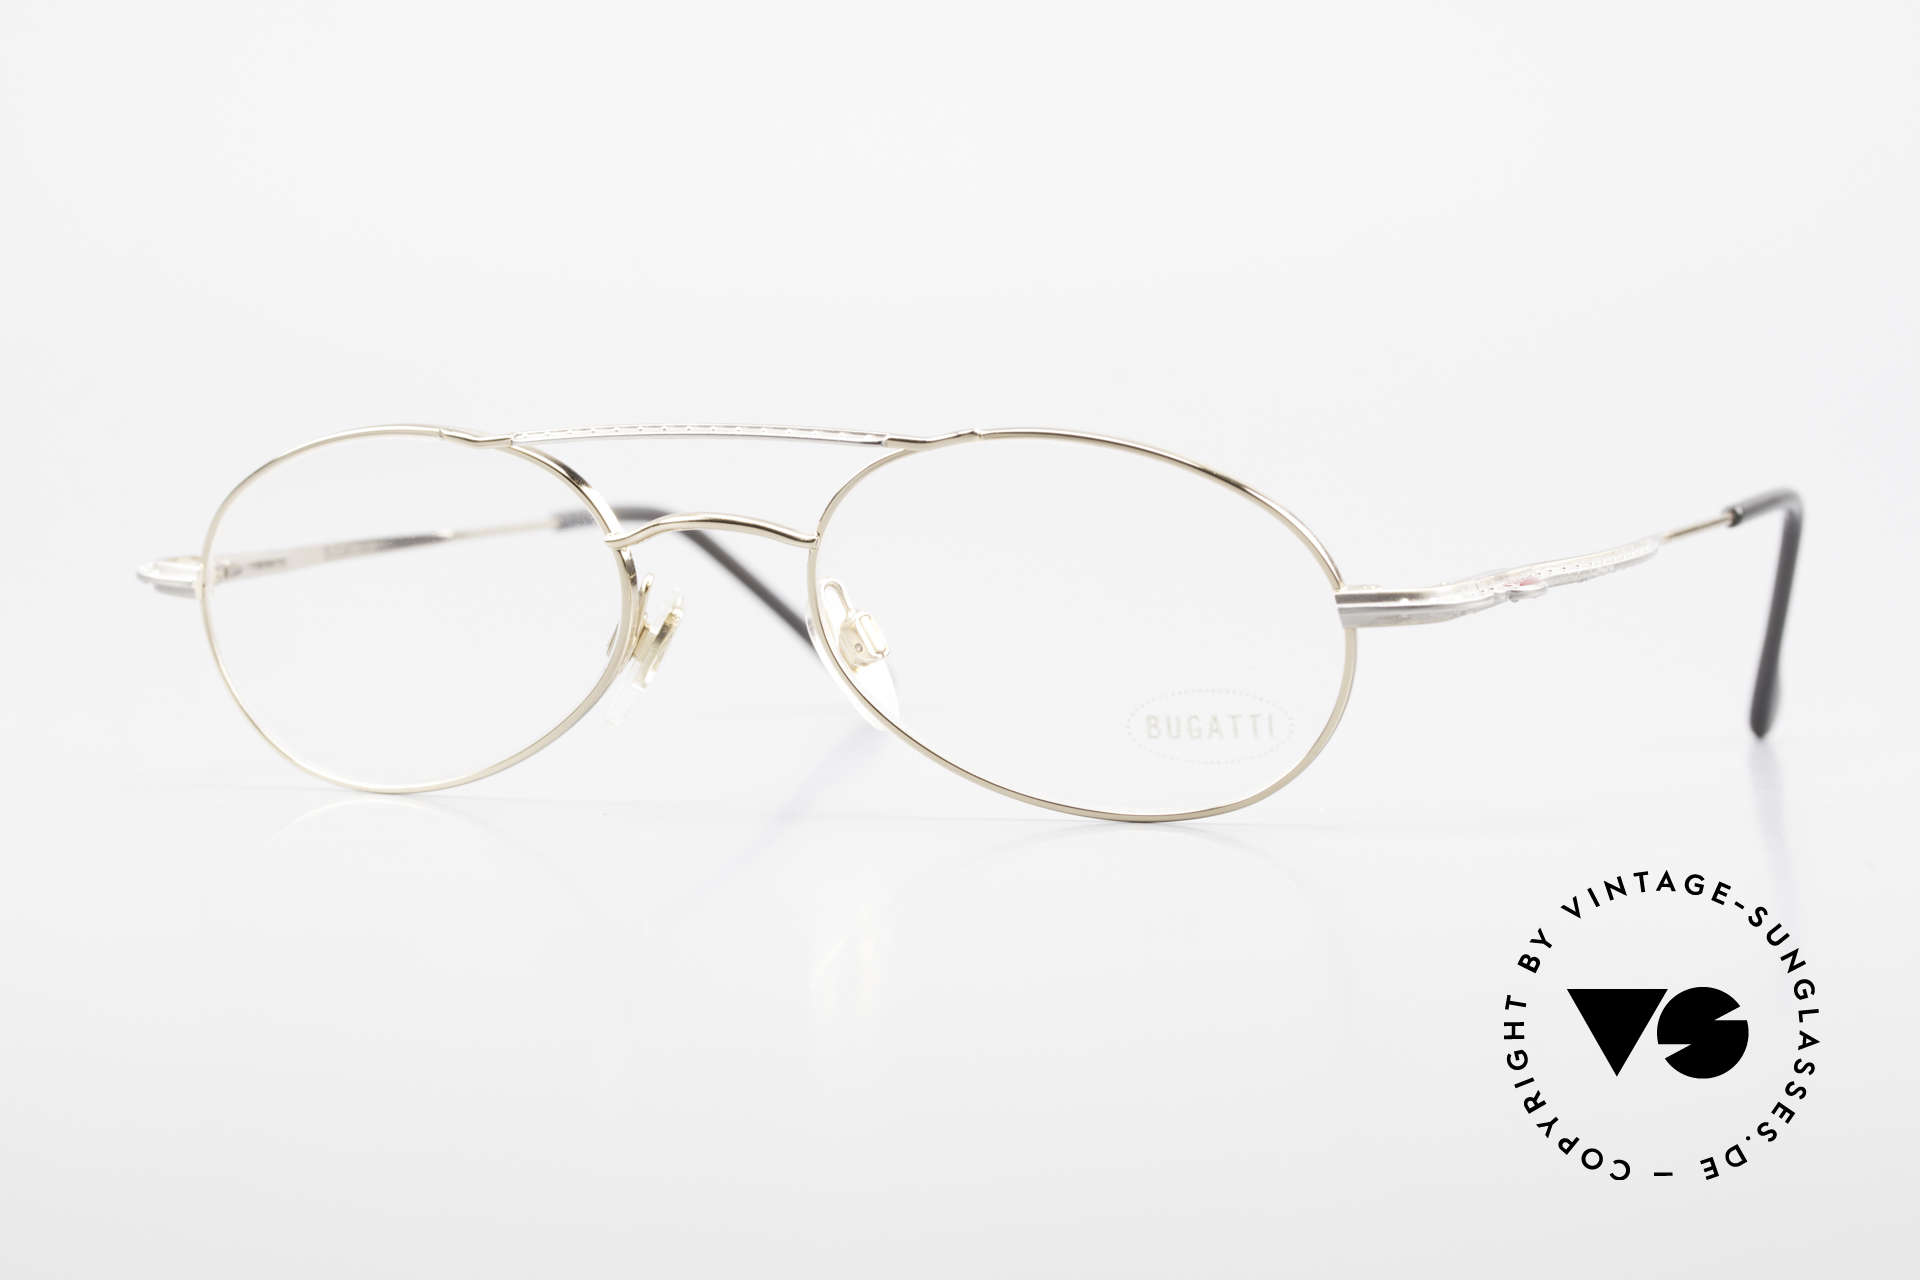 Bugatti 22996 Rare 90's Men's Eyeglass-Frame, very elegant vintage designer eyeglasses by Bugatti, Made for Men